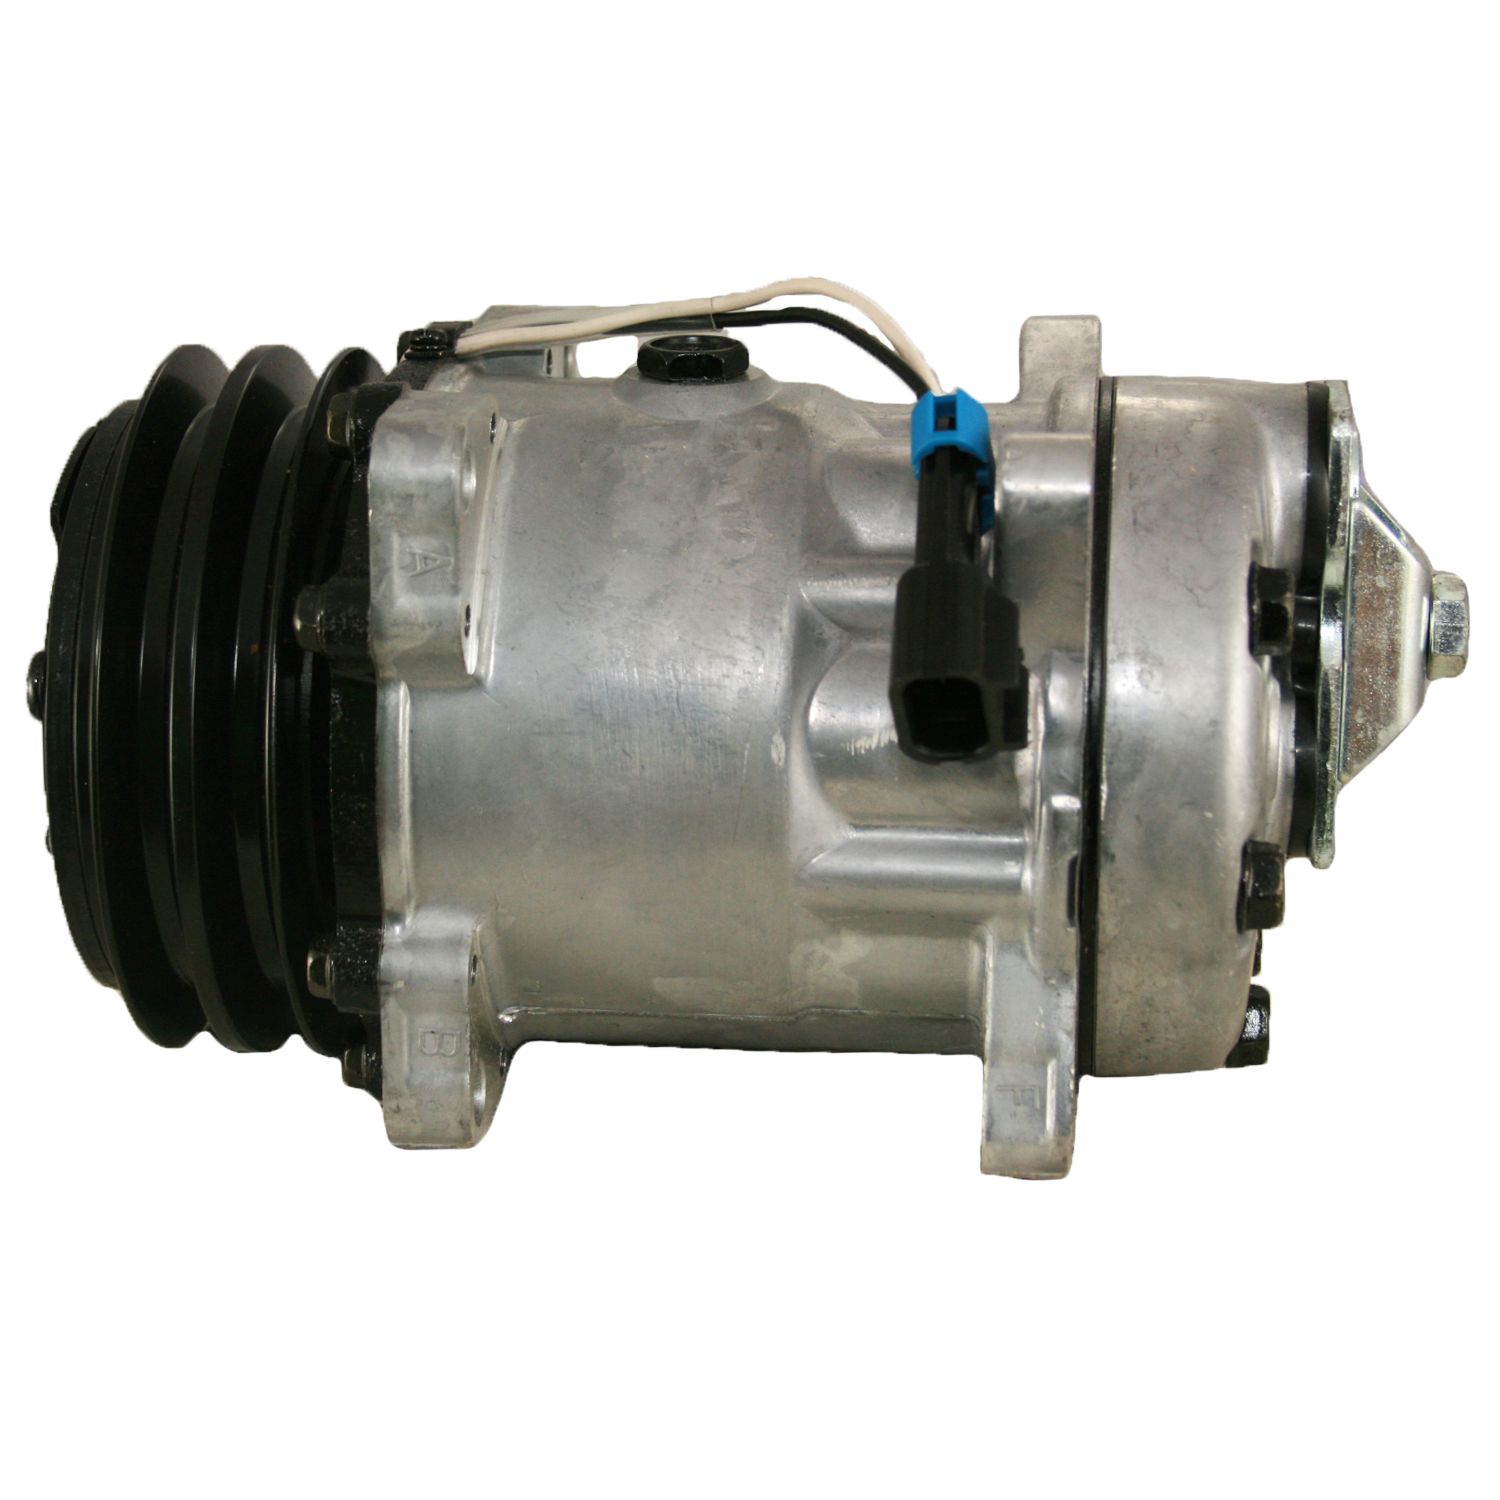 TCW Compressor 40552.201NEW New Product Image field_60b6a13a6e67c